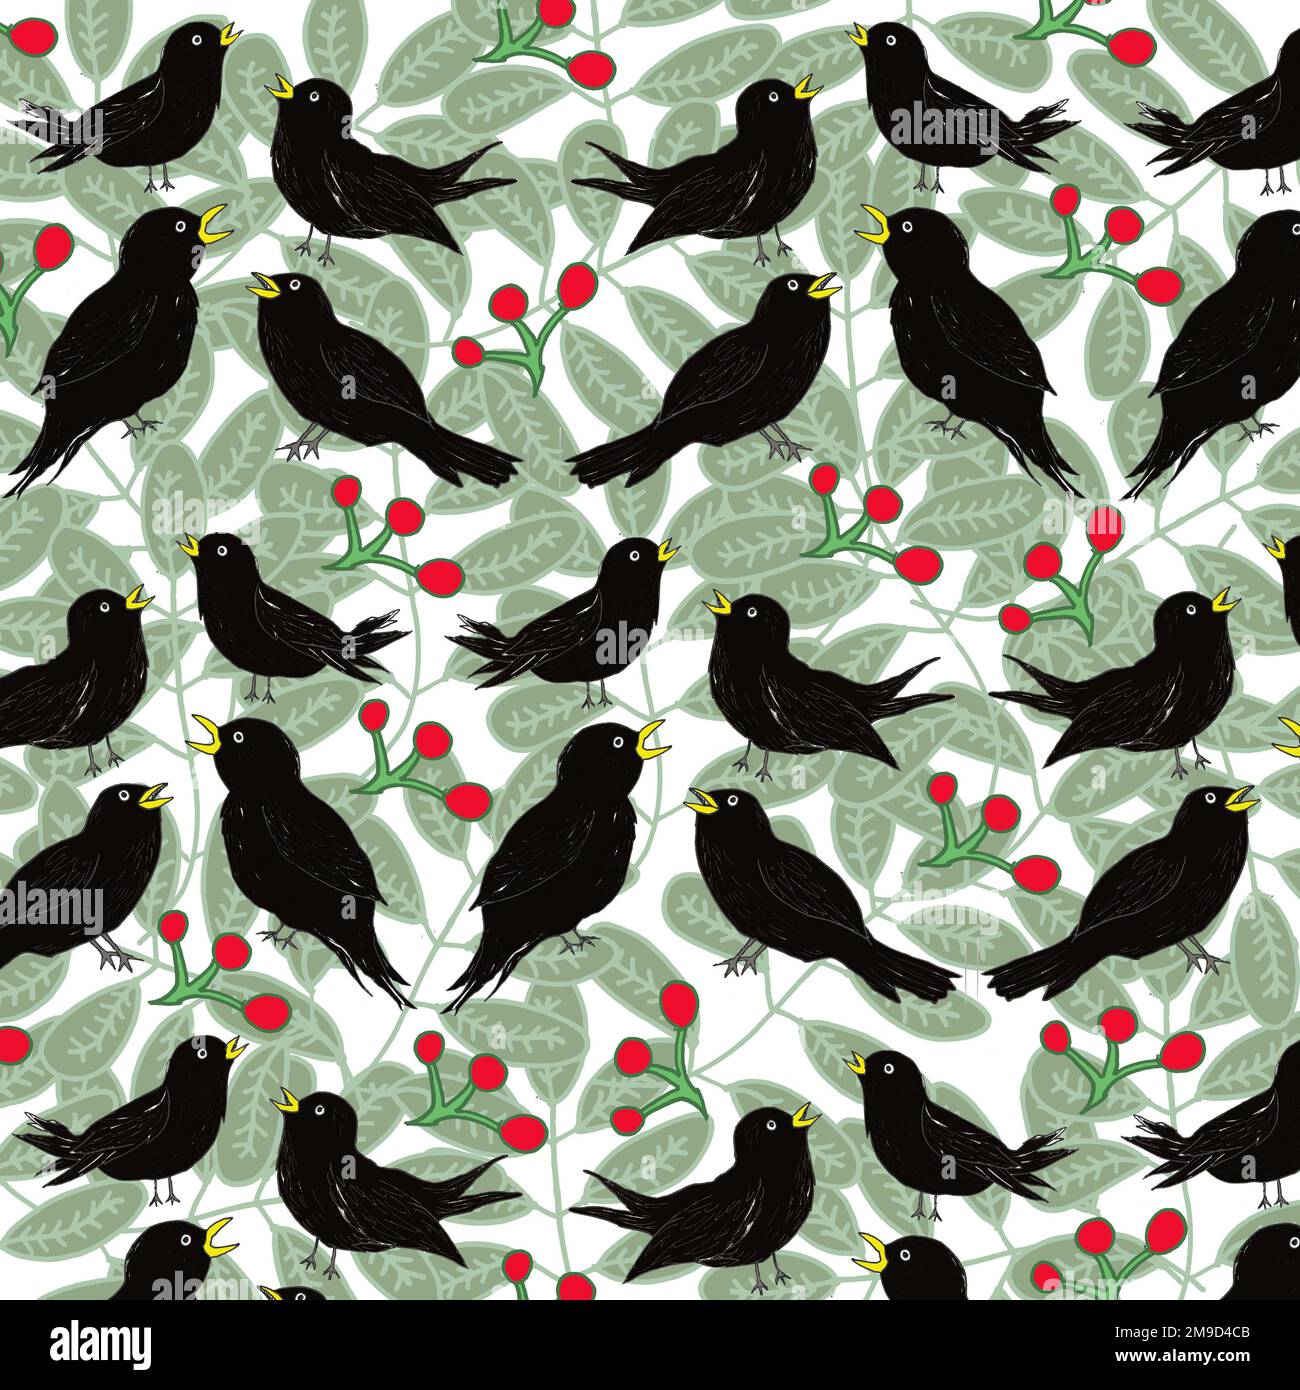 Blackbirds amongst leaves and berries. Stock Photo